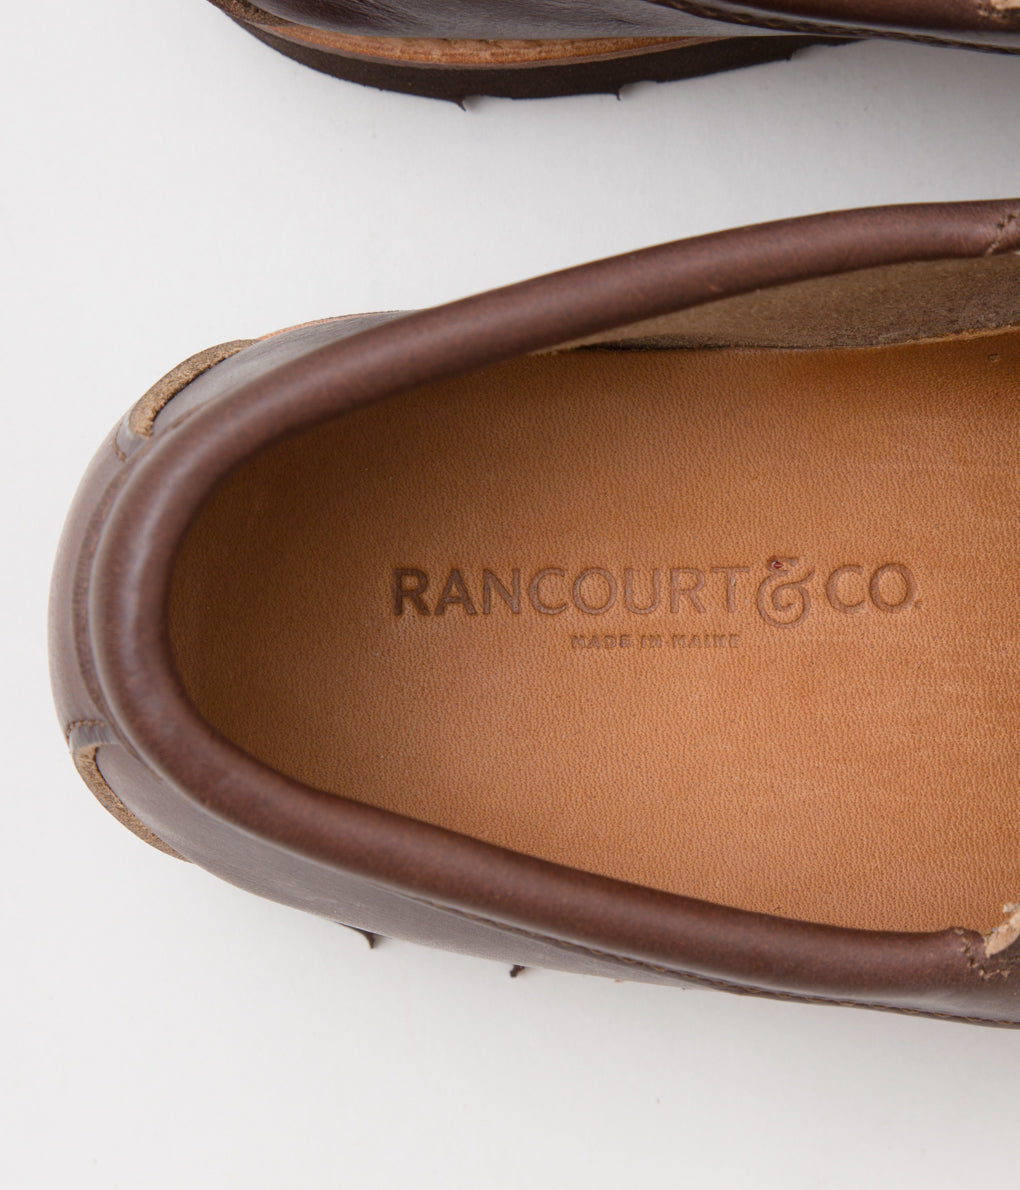 RANCOURT & CO. 